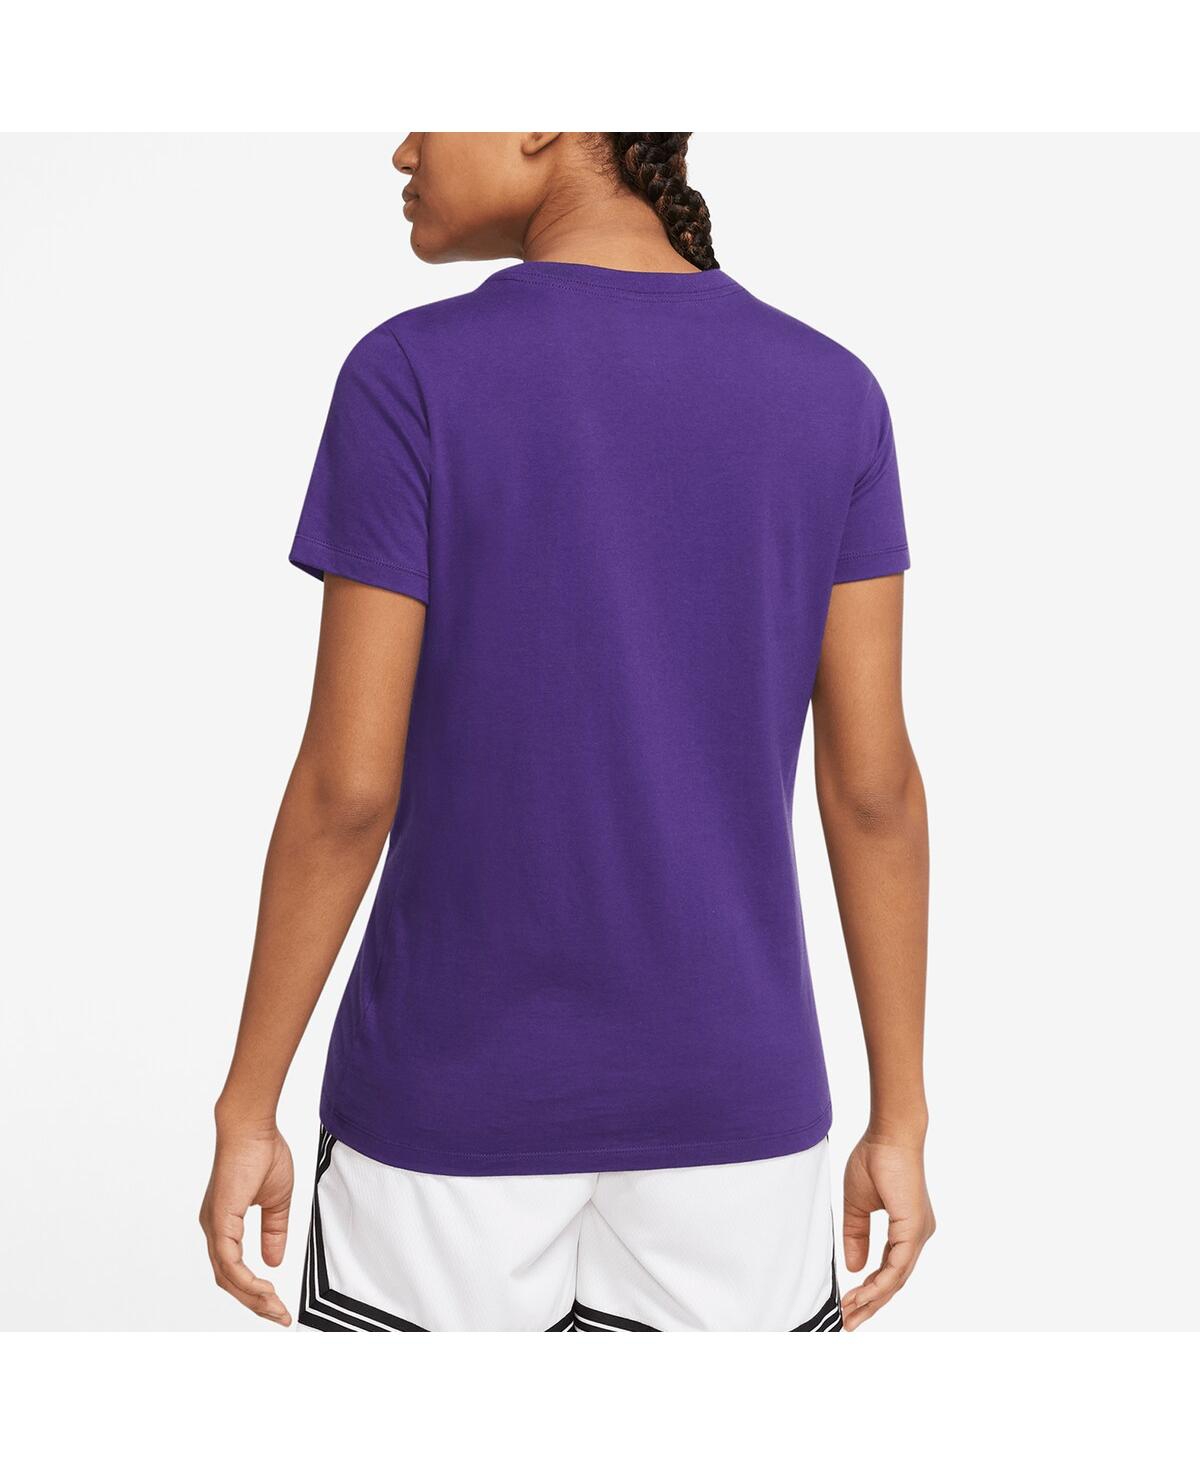 Shop Nike Women's  Purple Los Angeles Lakers 2022/23 City Edition Essential V-neck T-shirt